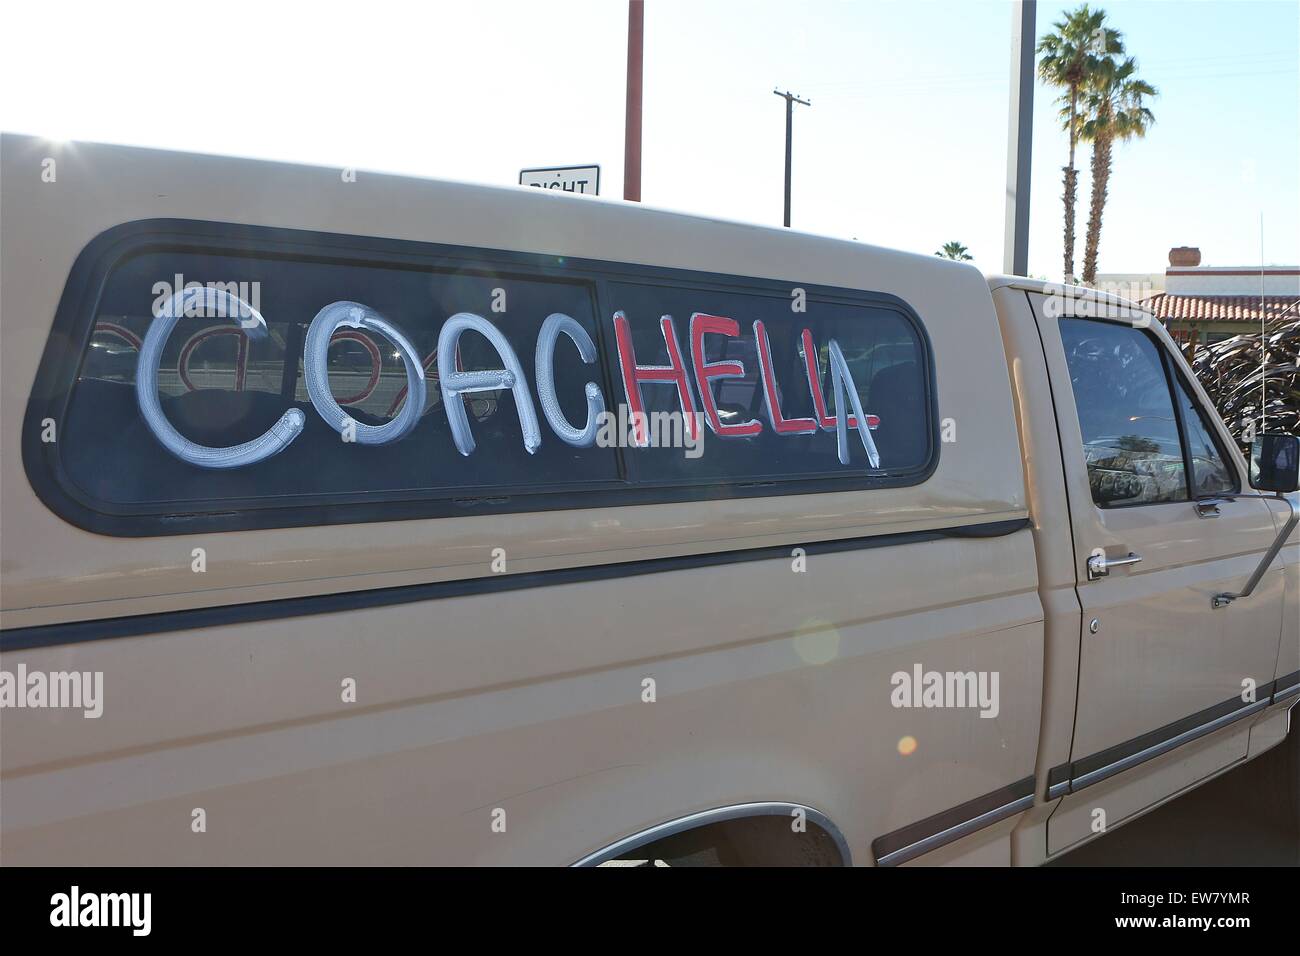 Coachella 2015 - Semaine 2 - Jour 2 : Atmosphère d' où : Indio, California, United States Quand : 18 Avr 2015 Banque D'Images